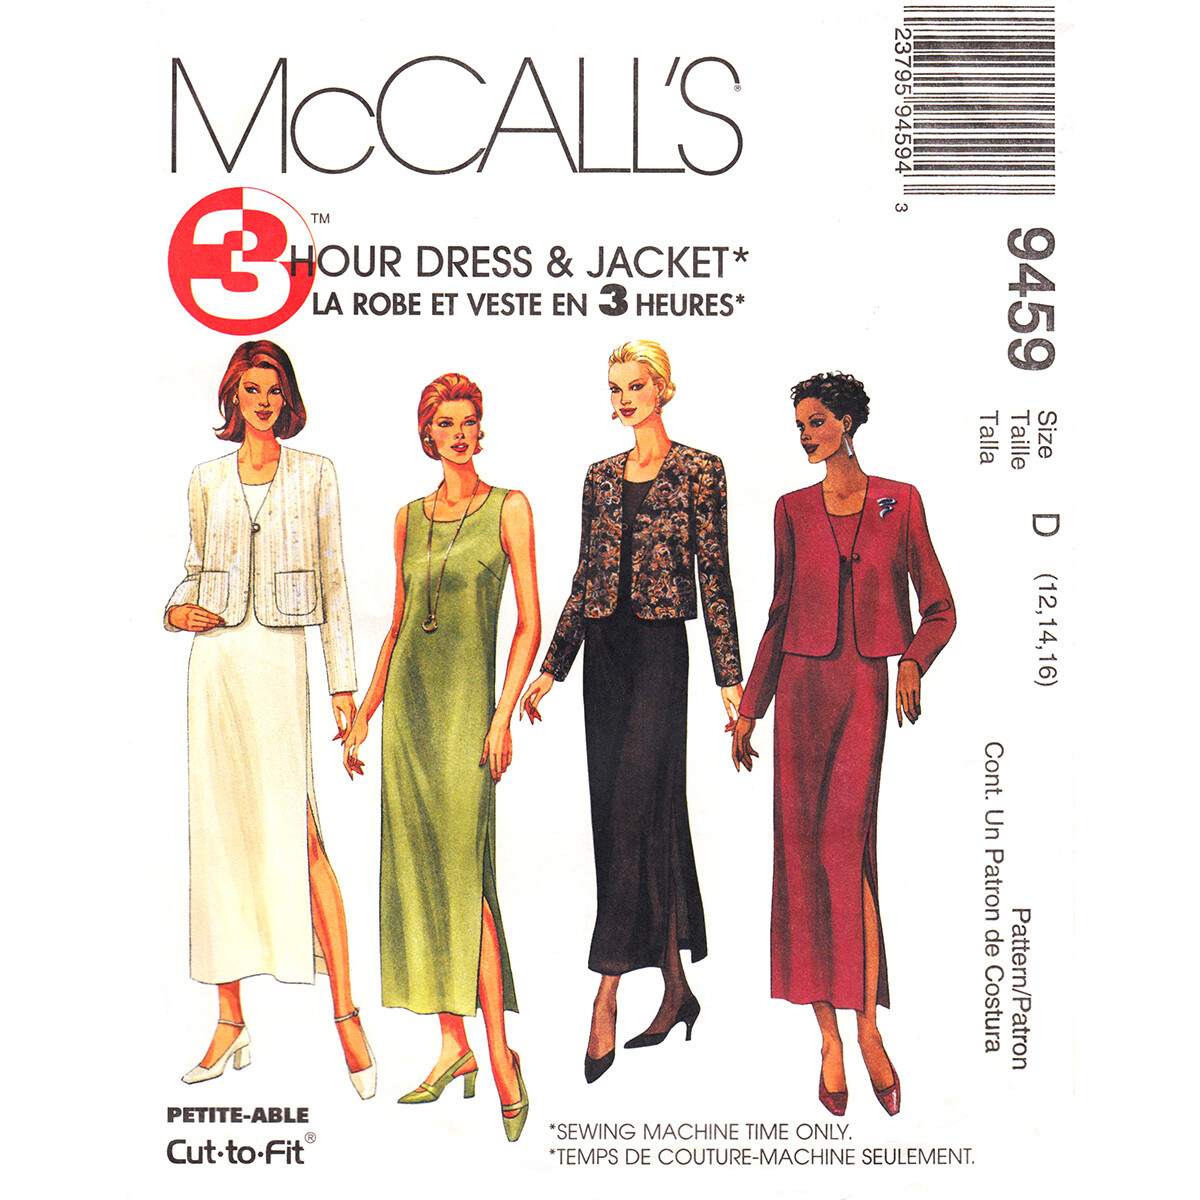 McCall's 9459 pattern